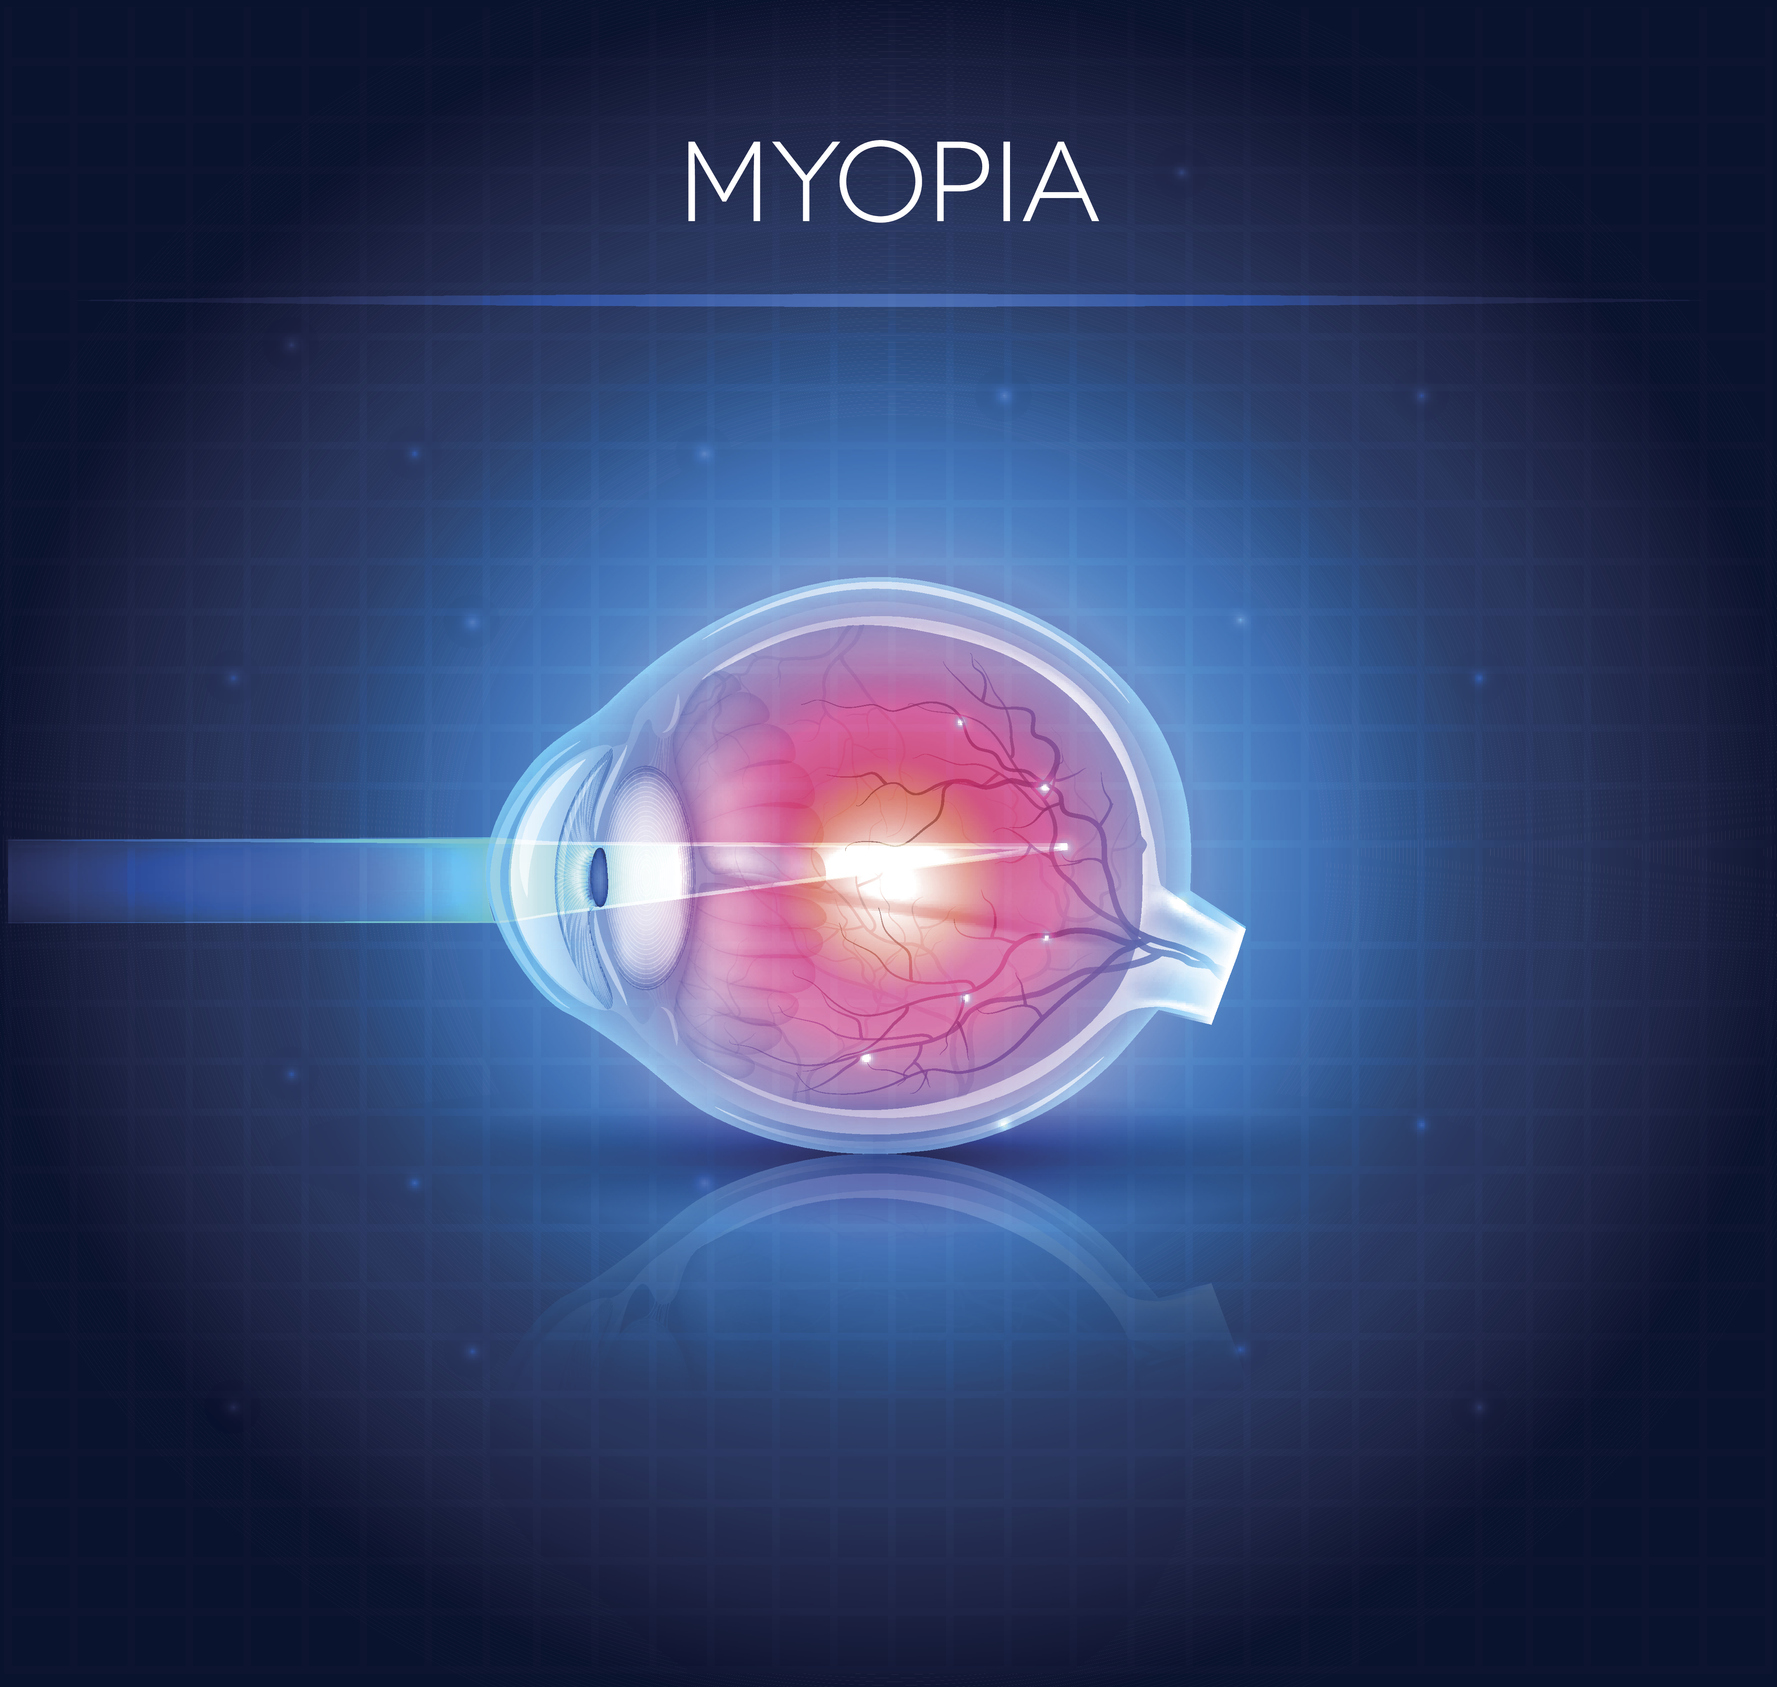 Myopia eyesight disorder